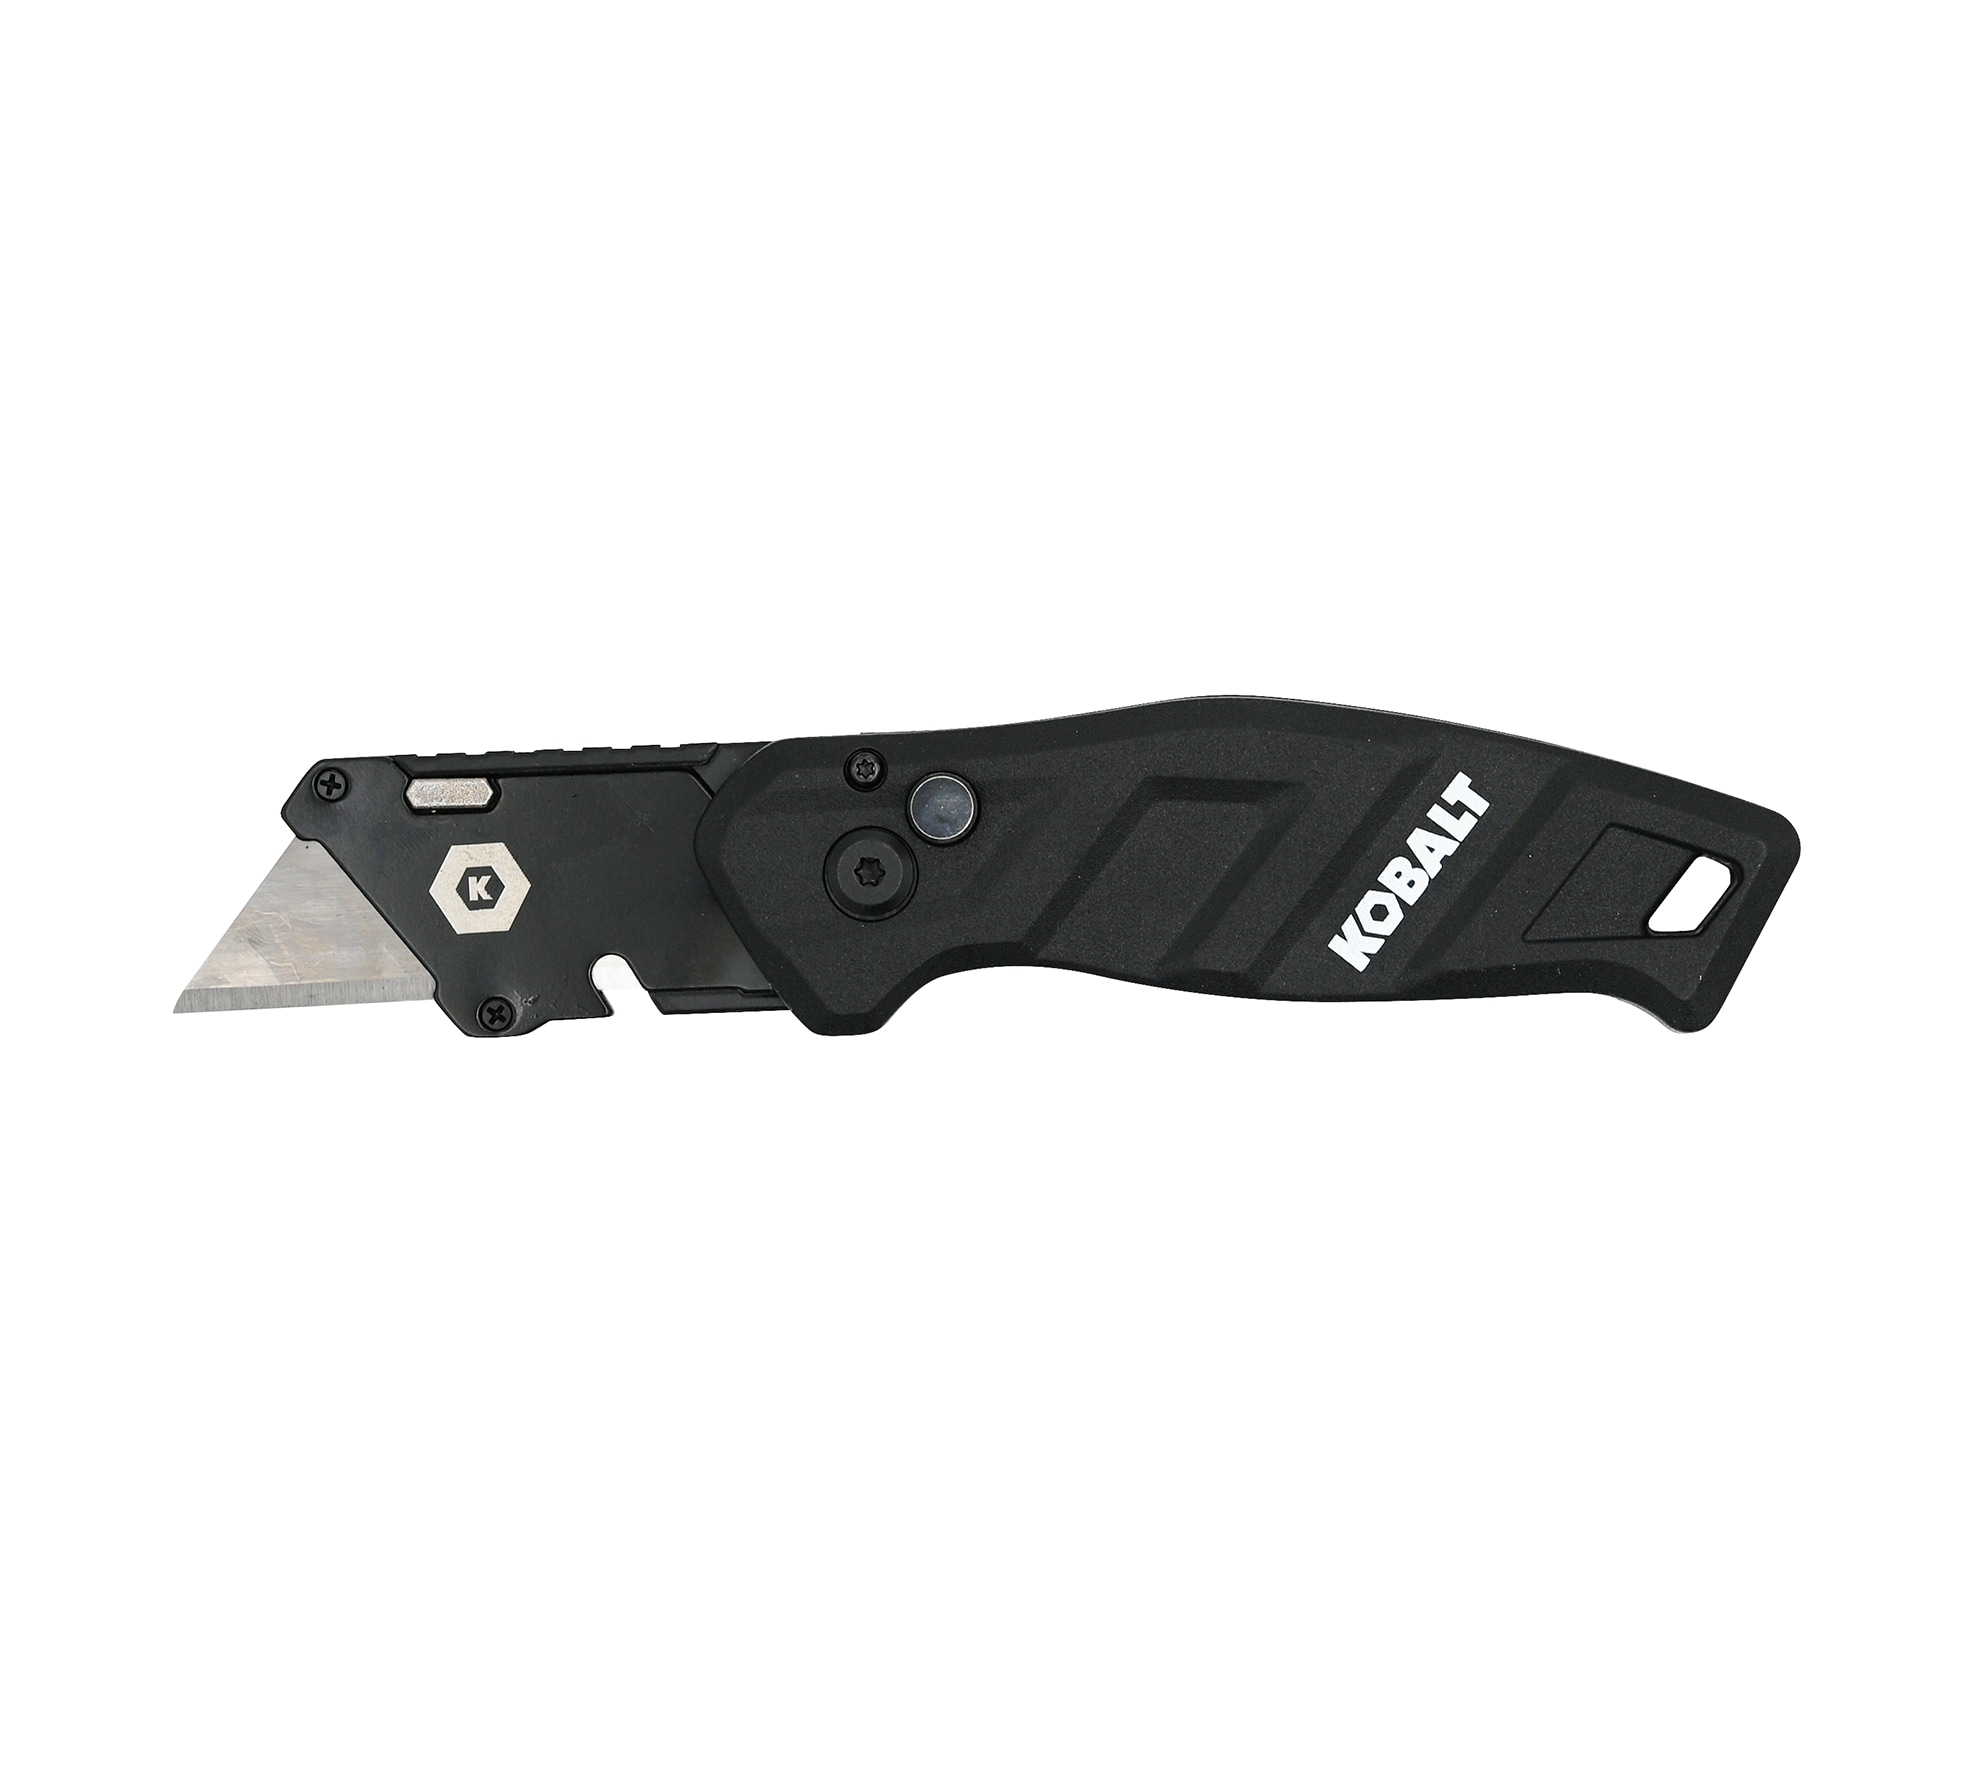 Speed Release Compact 1-Blade Folding Utility Knife | - Kobalt 58993